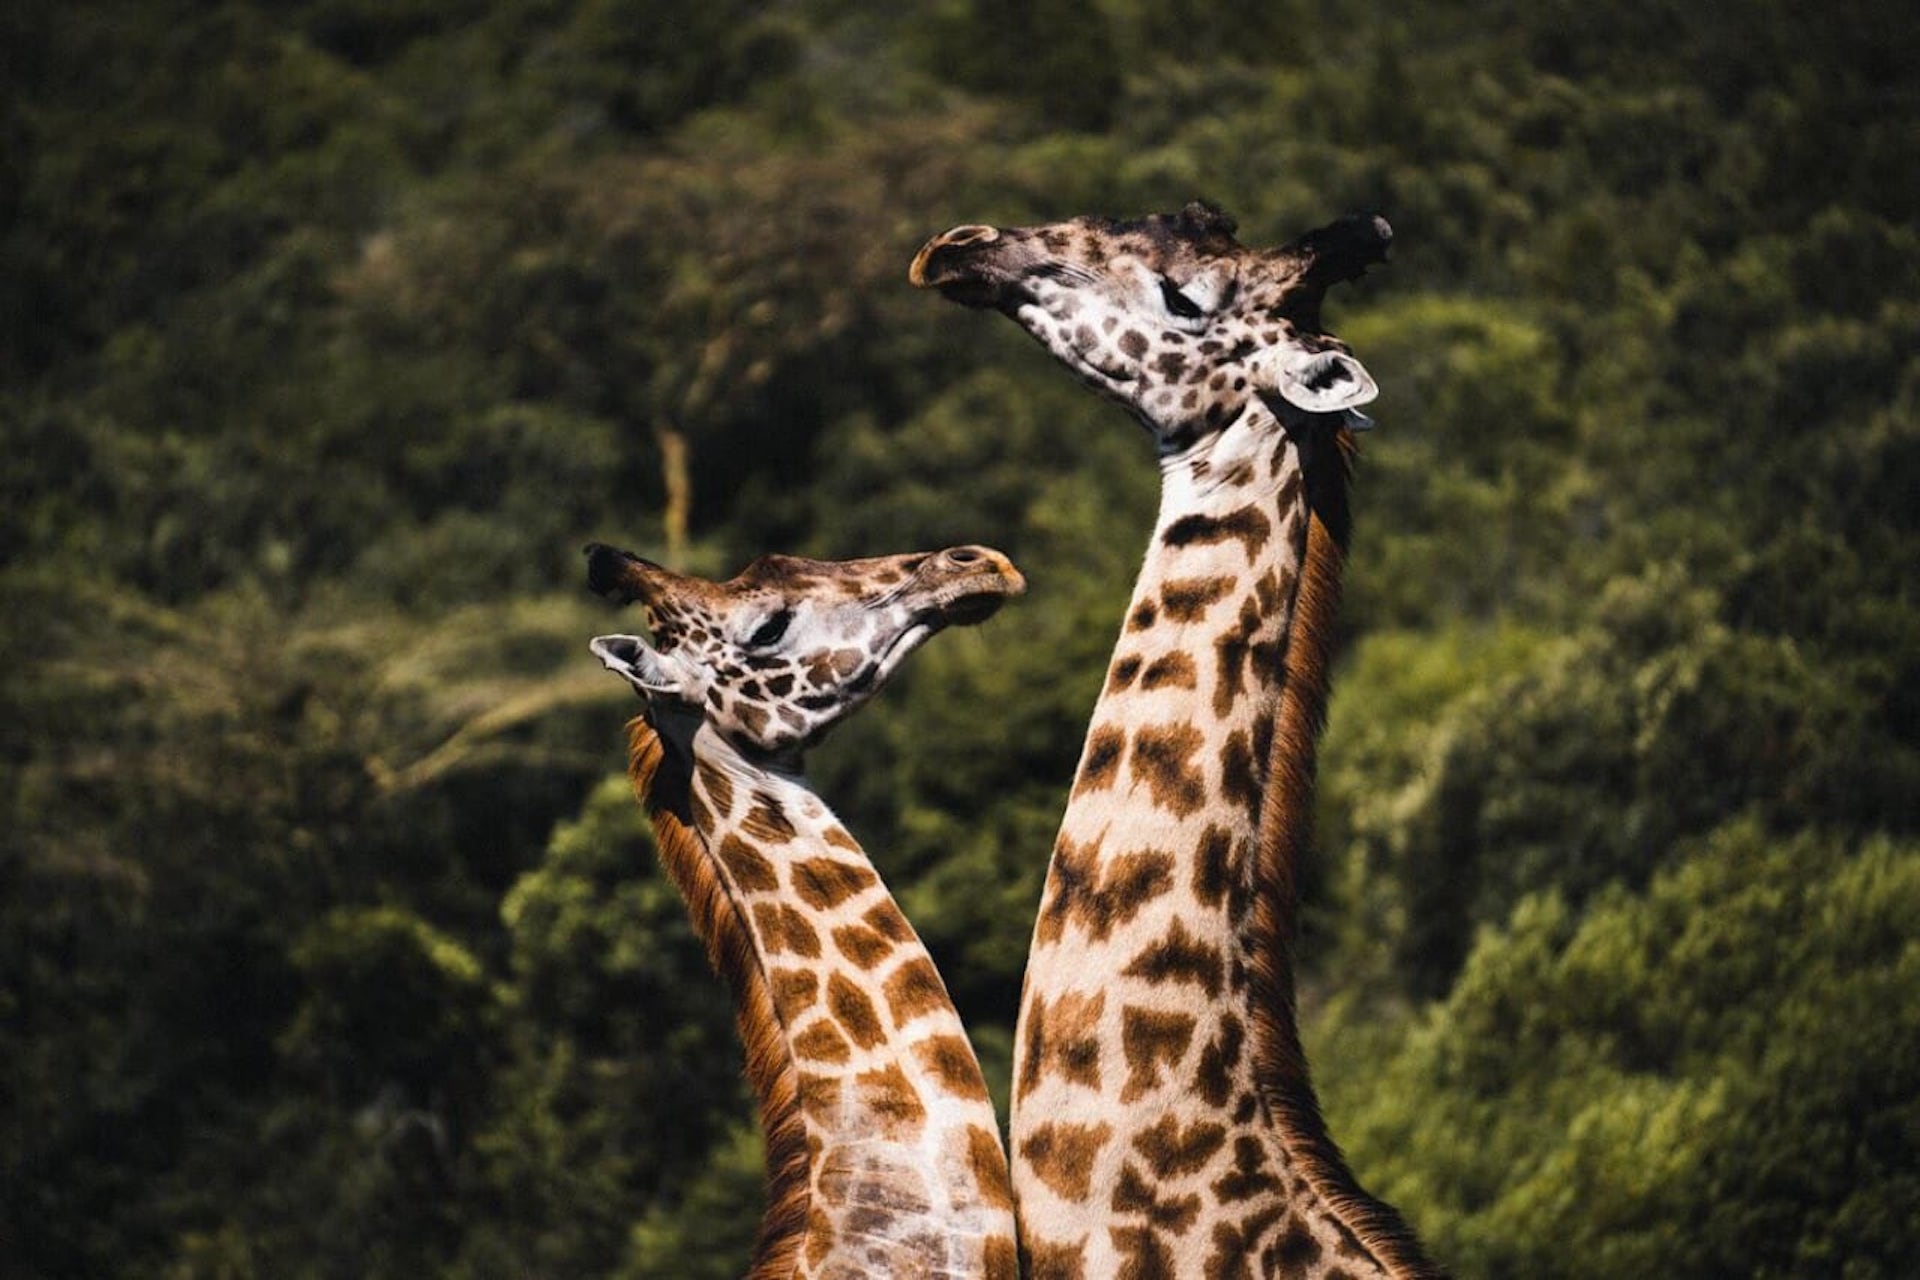 Giraffes with World Adventure Tours